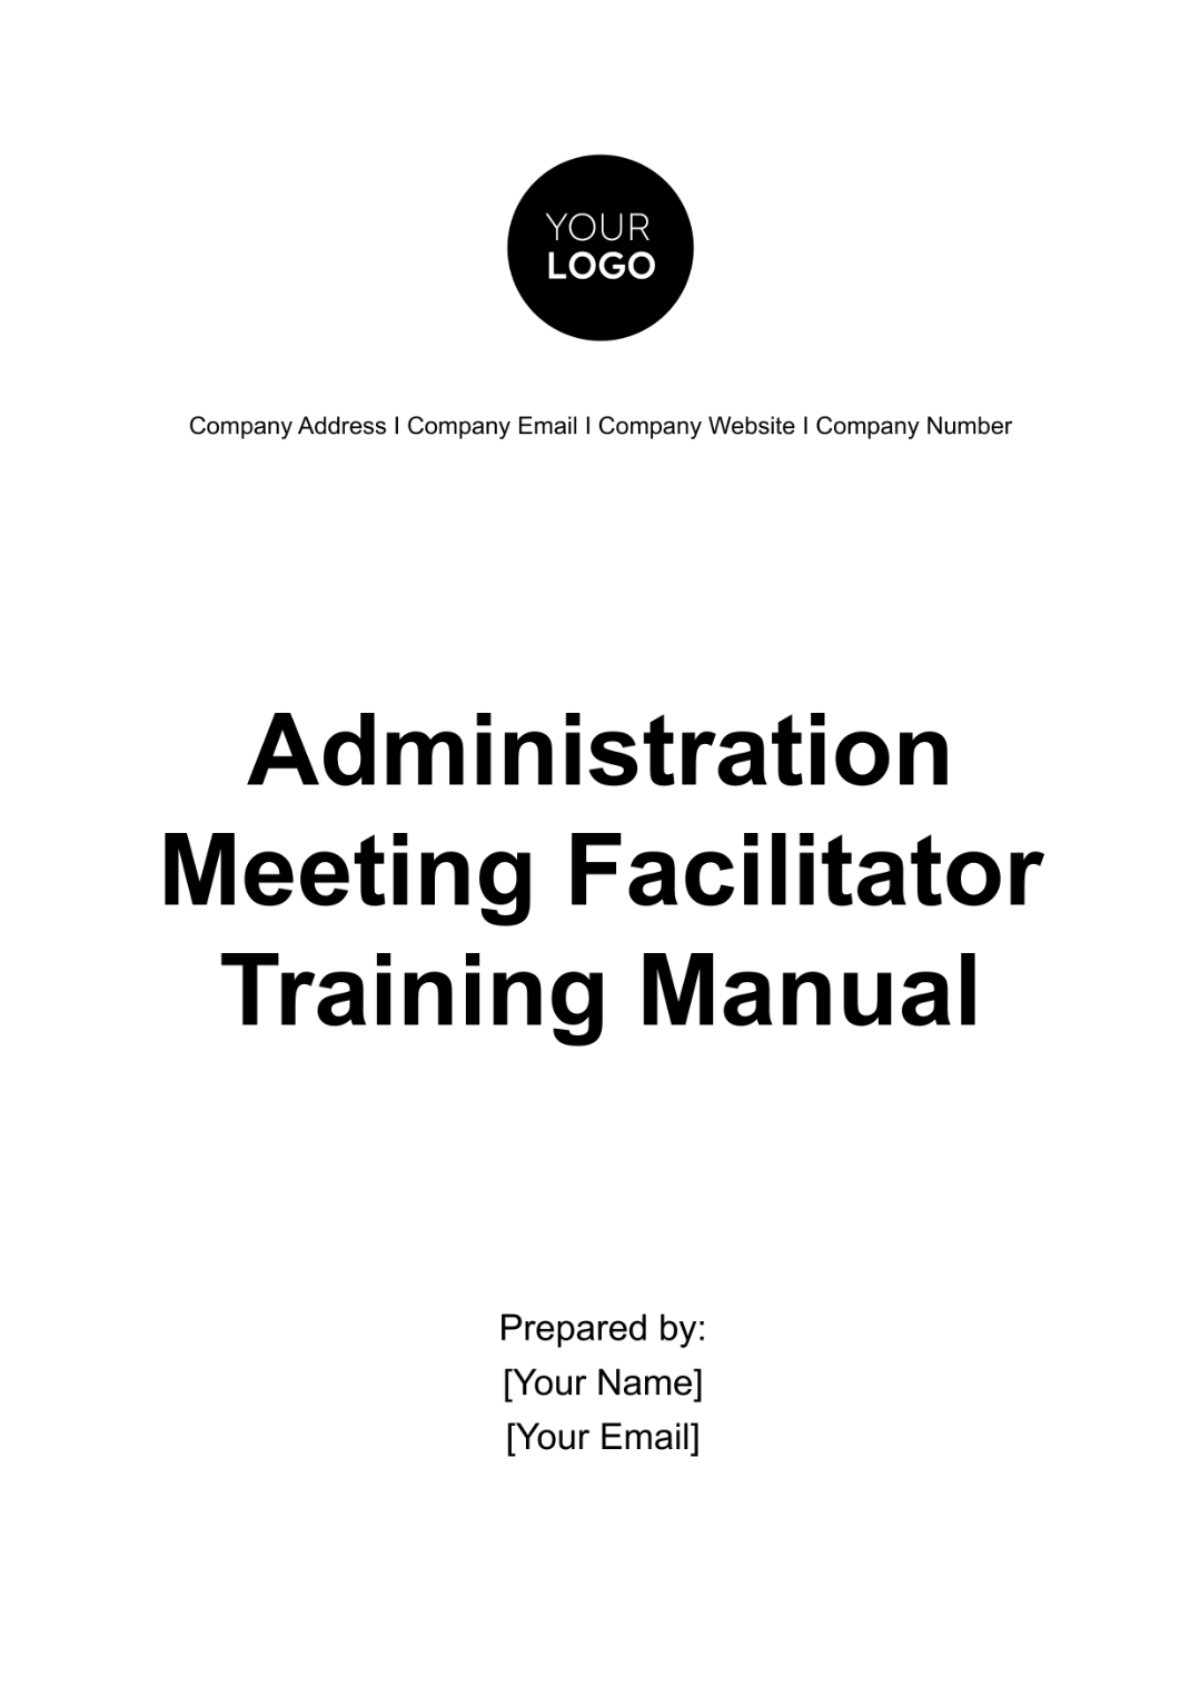 Free Administration Meeting Facilitator Training Manual Template